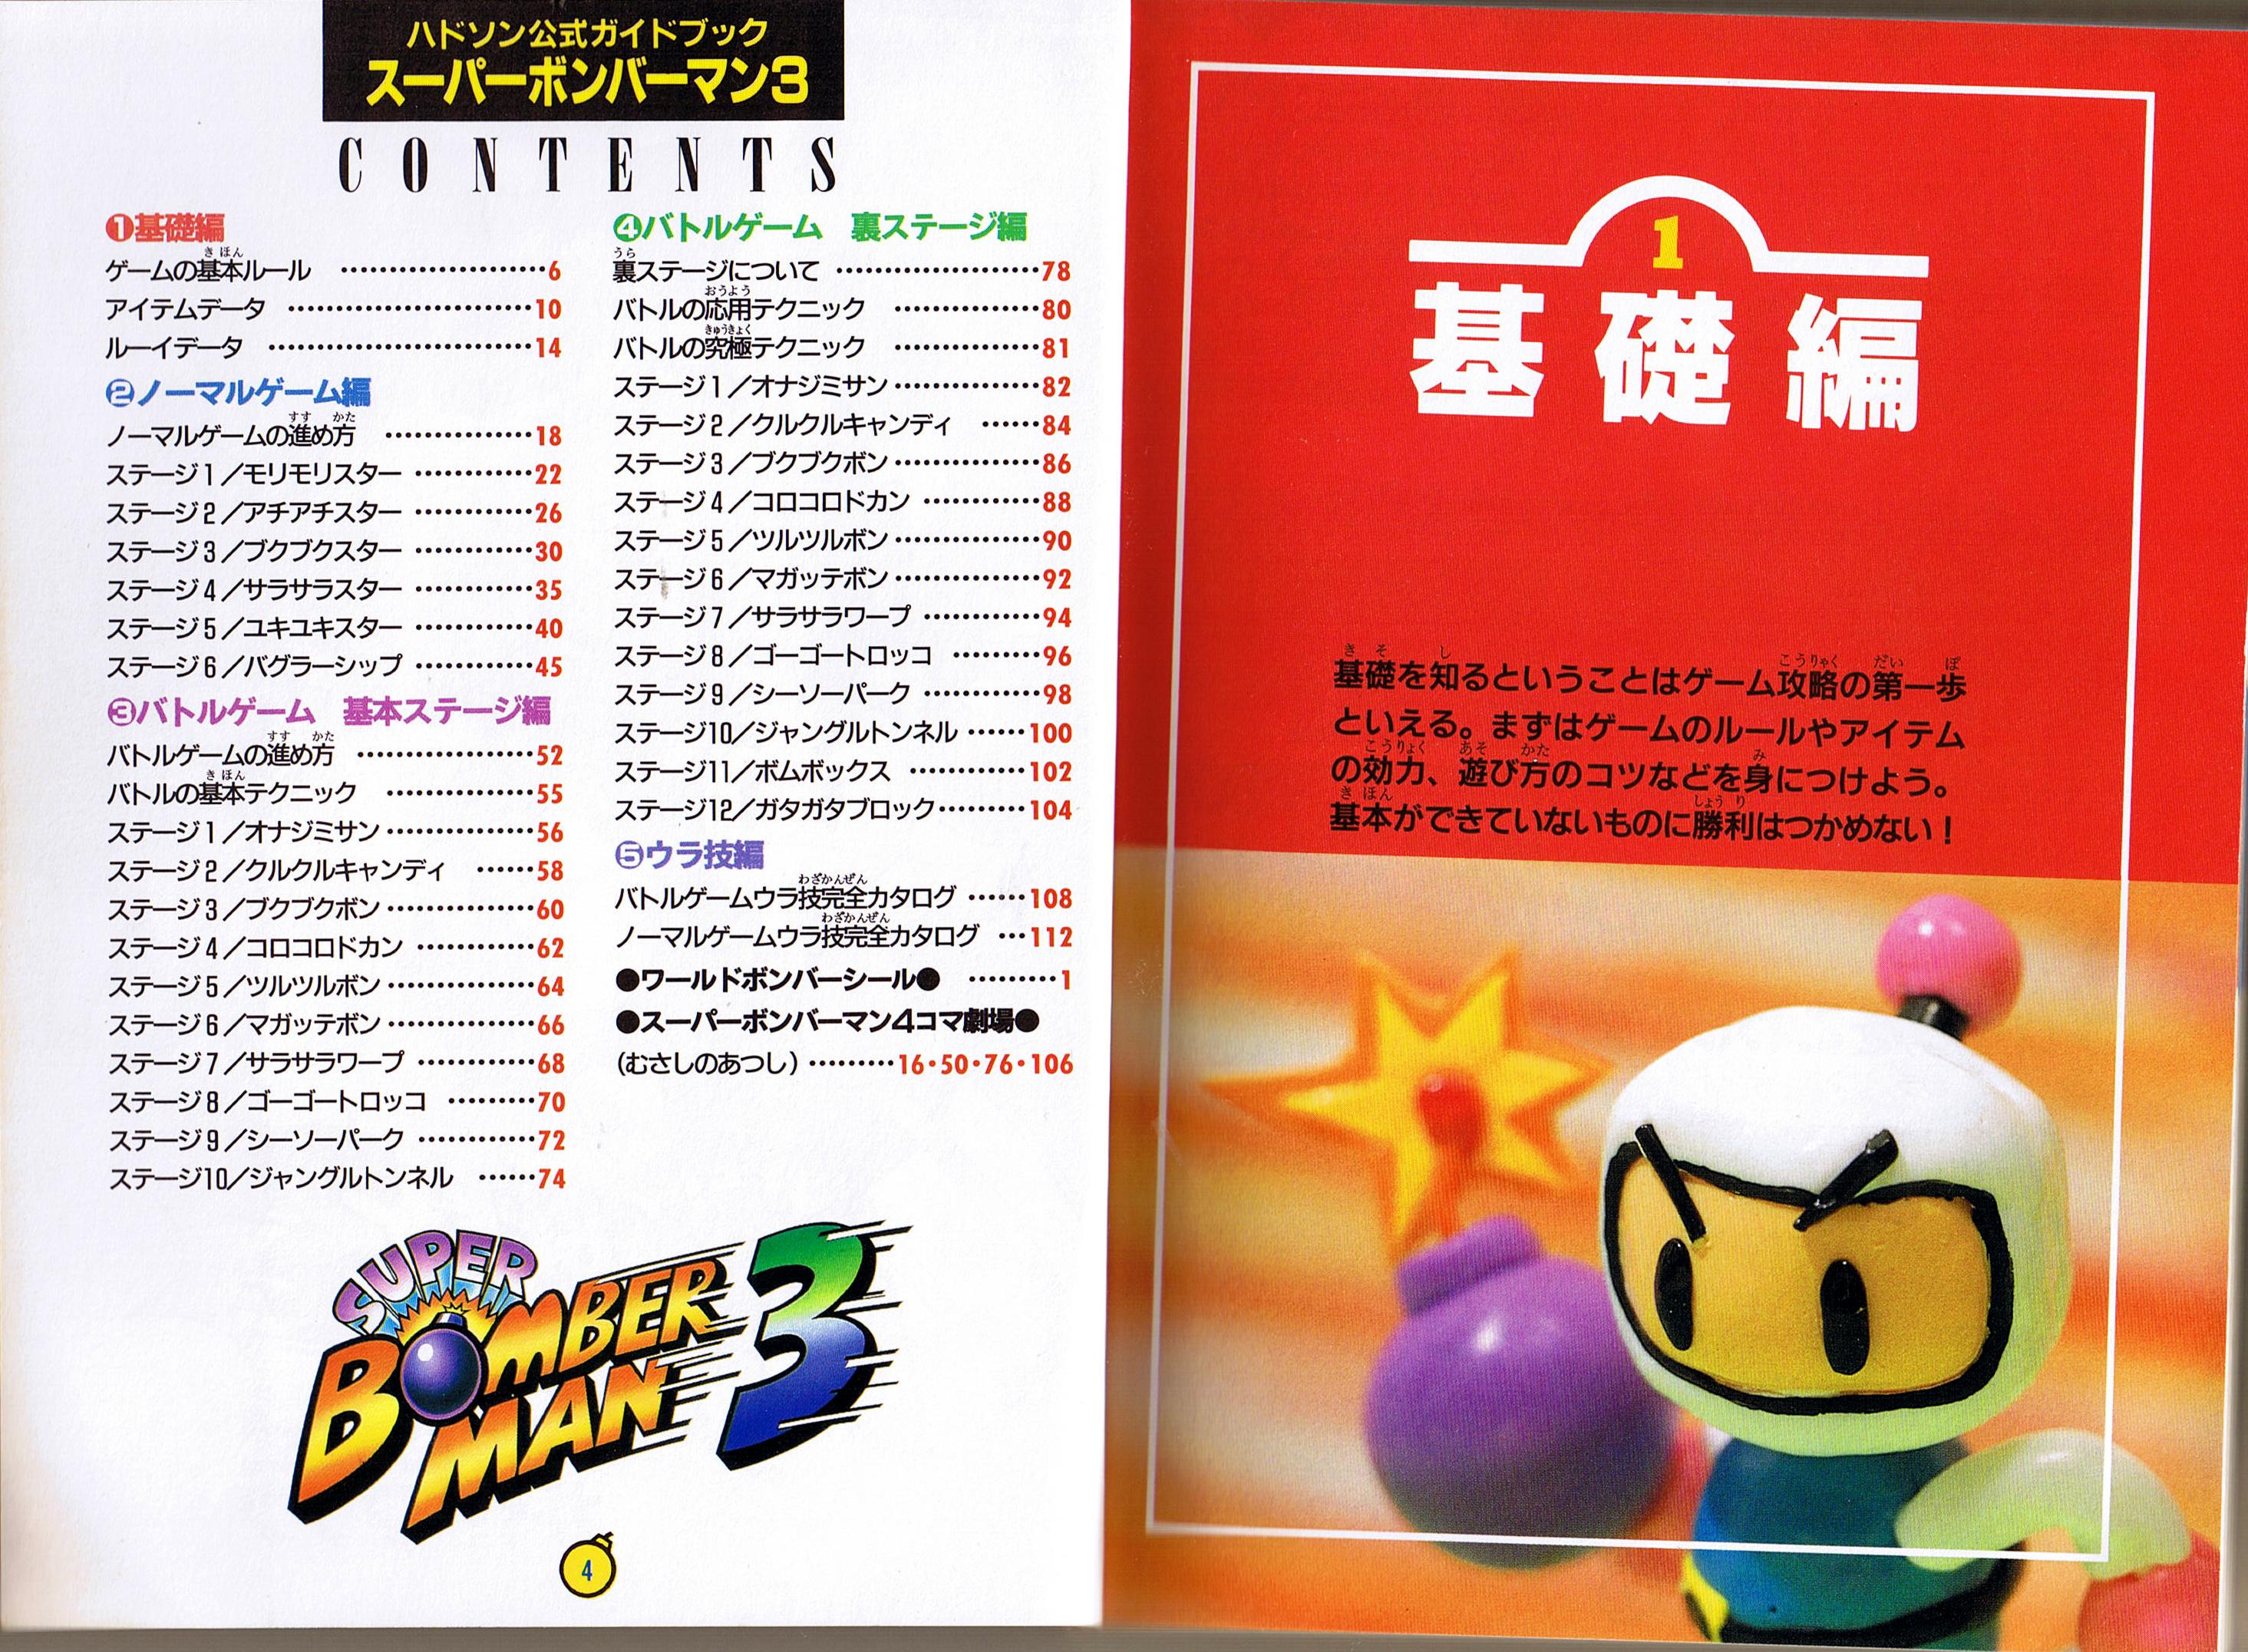 NINTENDO SUPER FAMICOM GAME BOMBERMAN 3 BOMBER MAN W BOX MANUAL JAPAN  COMPLETE